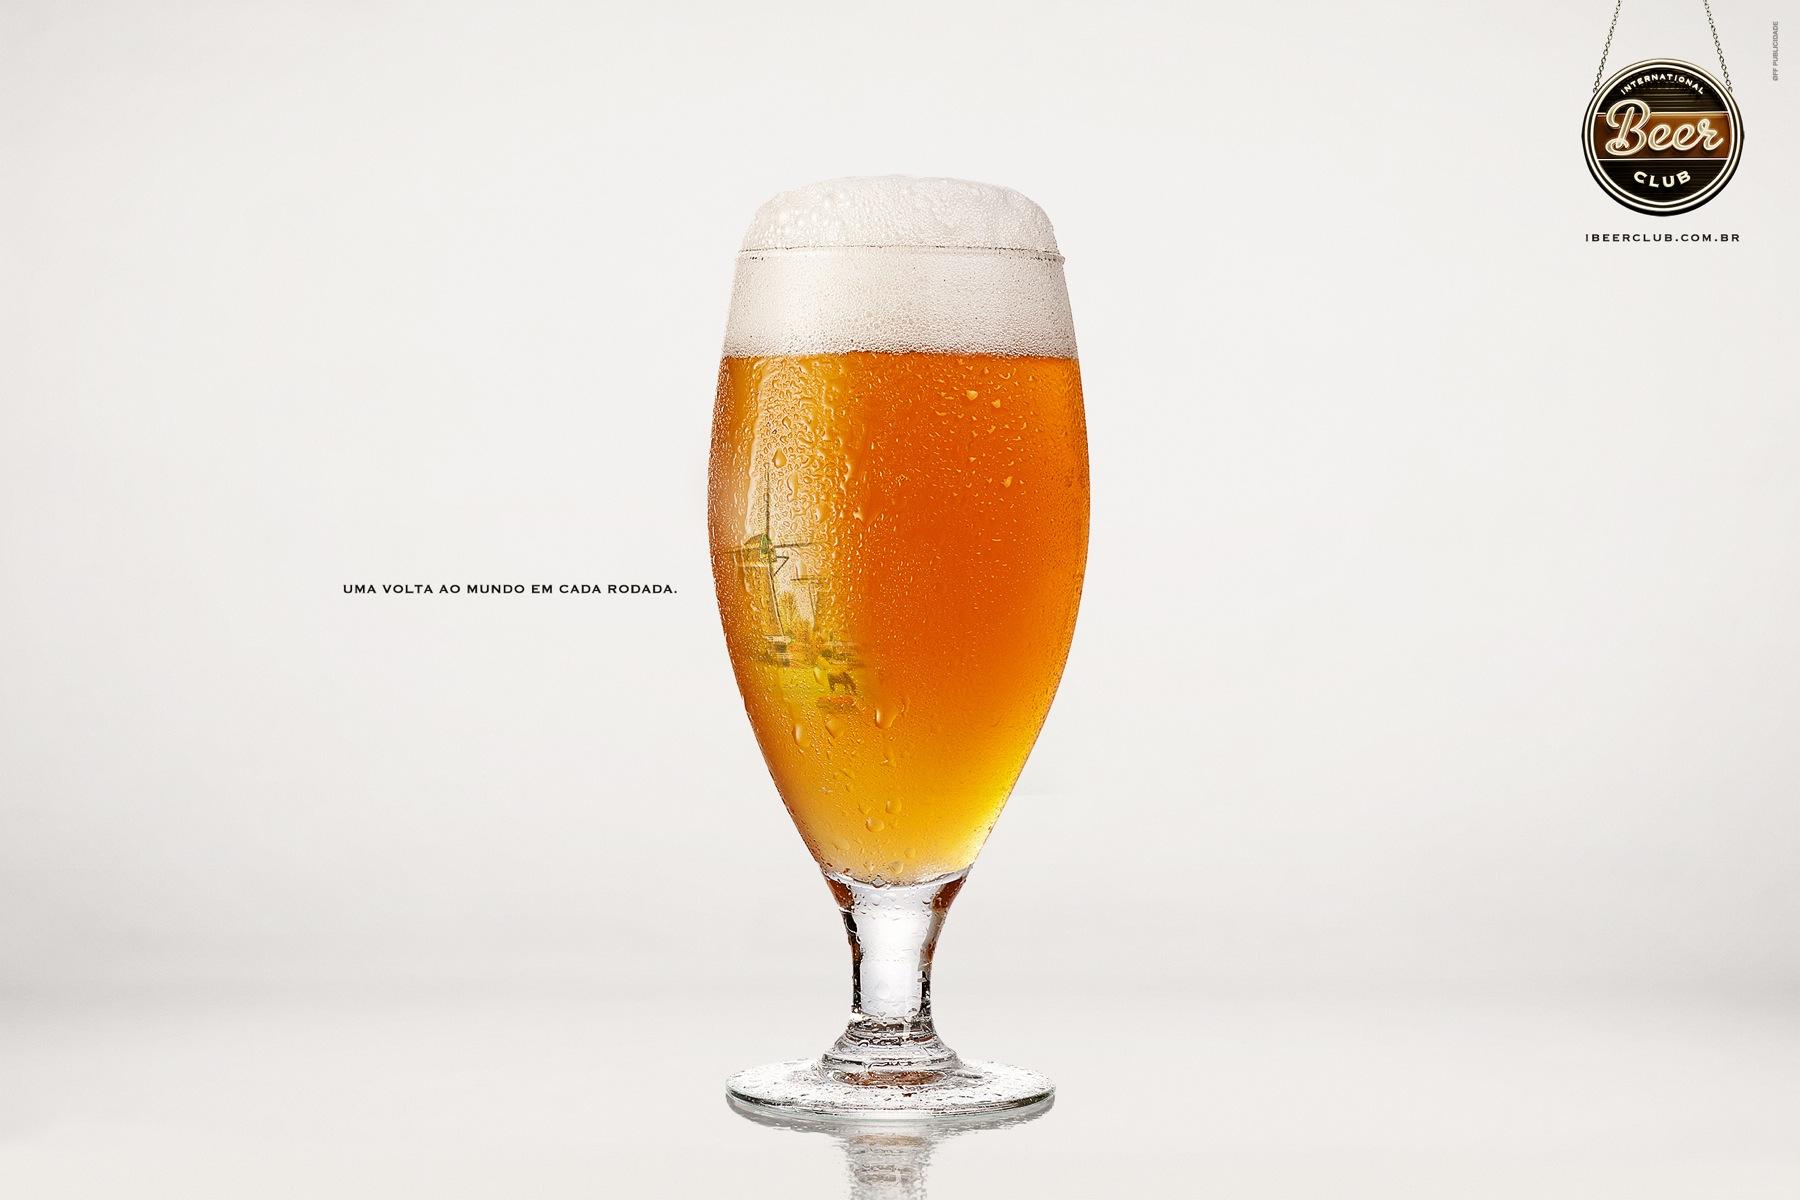 internationalbeer国际啤酒俱乐部平面广告